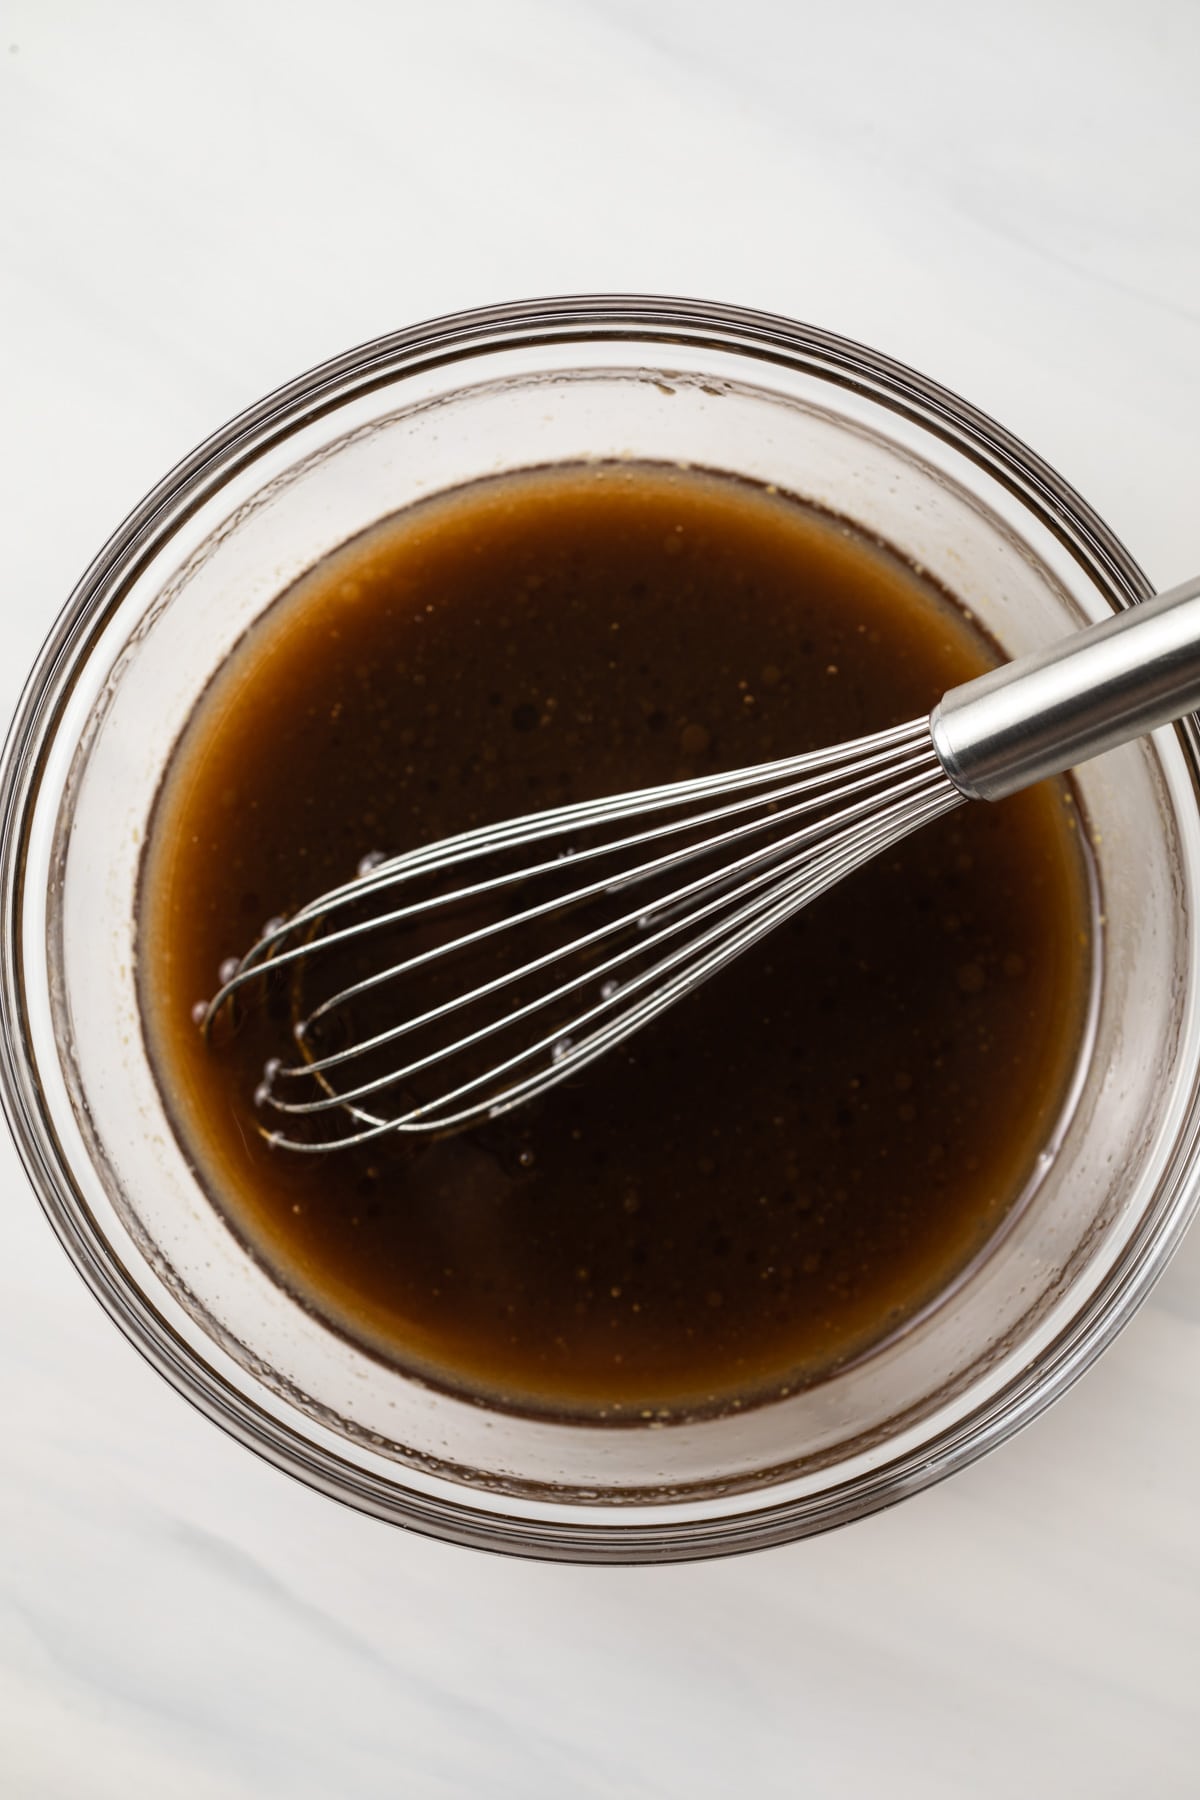 Honey Balsamic Vinaigrette in a glass bowl with whisk.